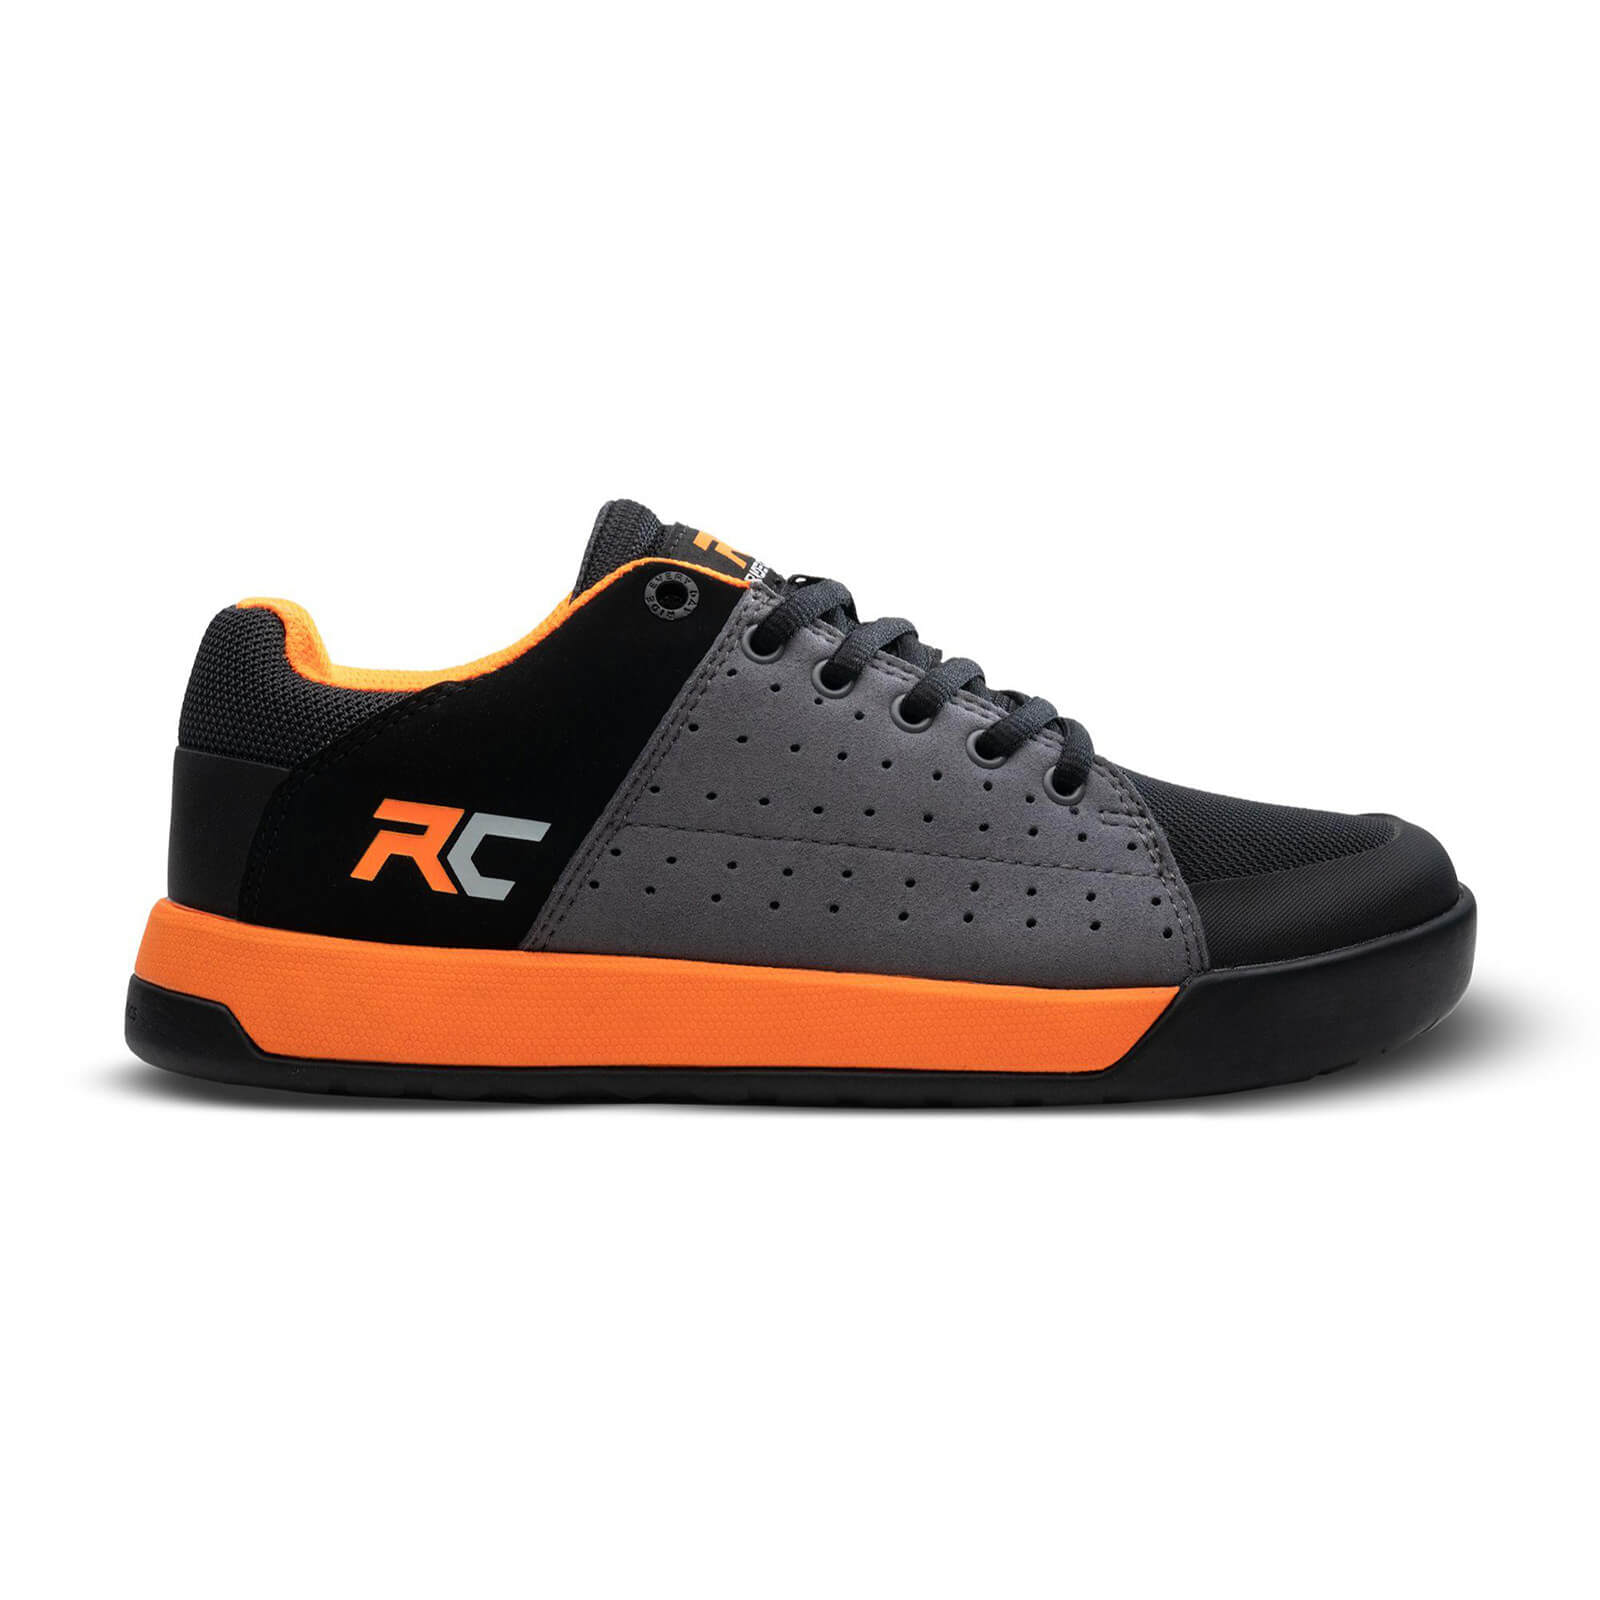 Image of Ride Concepts Youth Livewire Flat MTB Shoes - UK 2.5/EU 35/US 3 - Charcoal/Orange